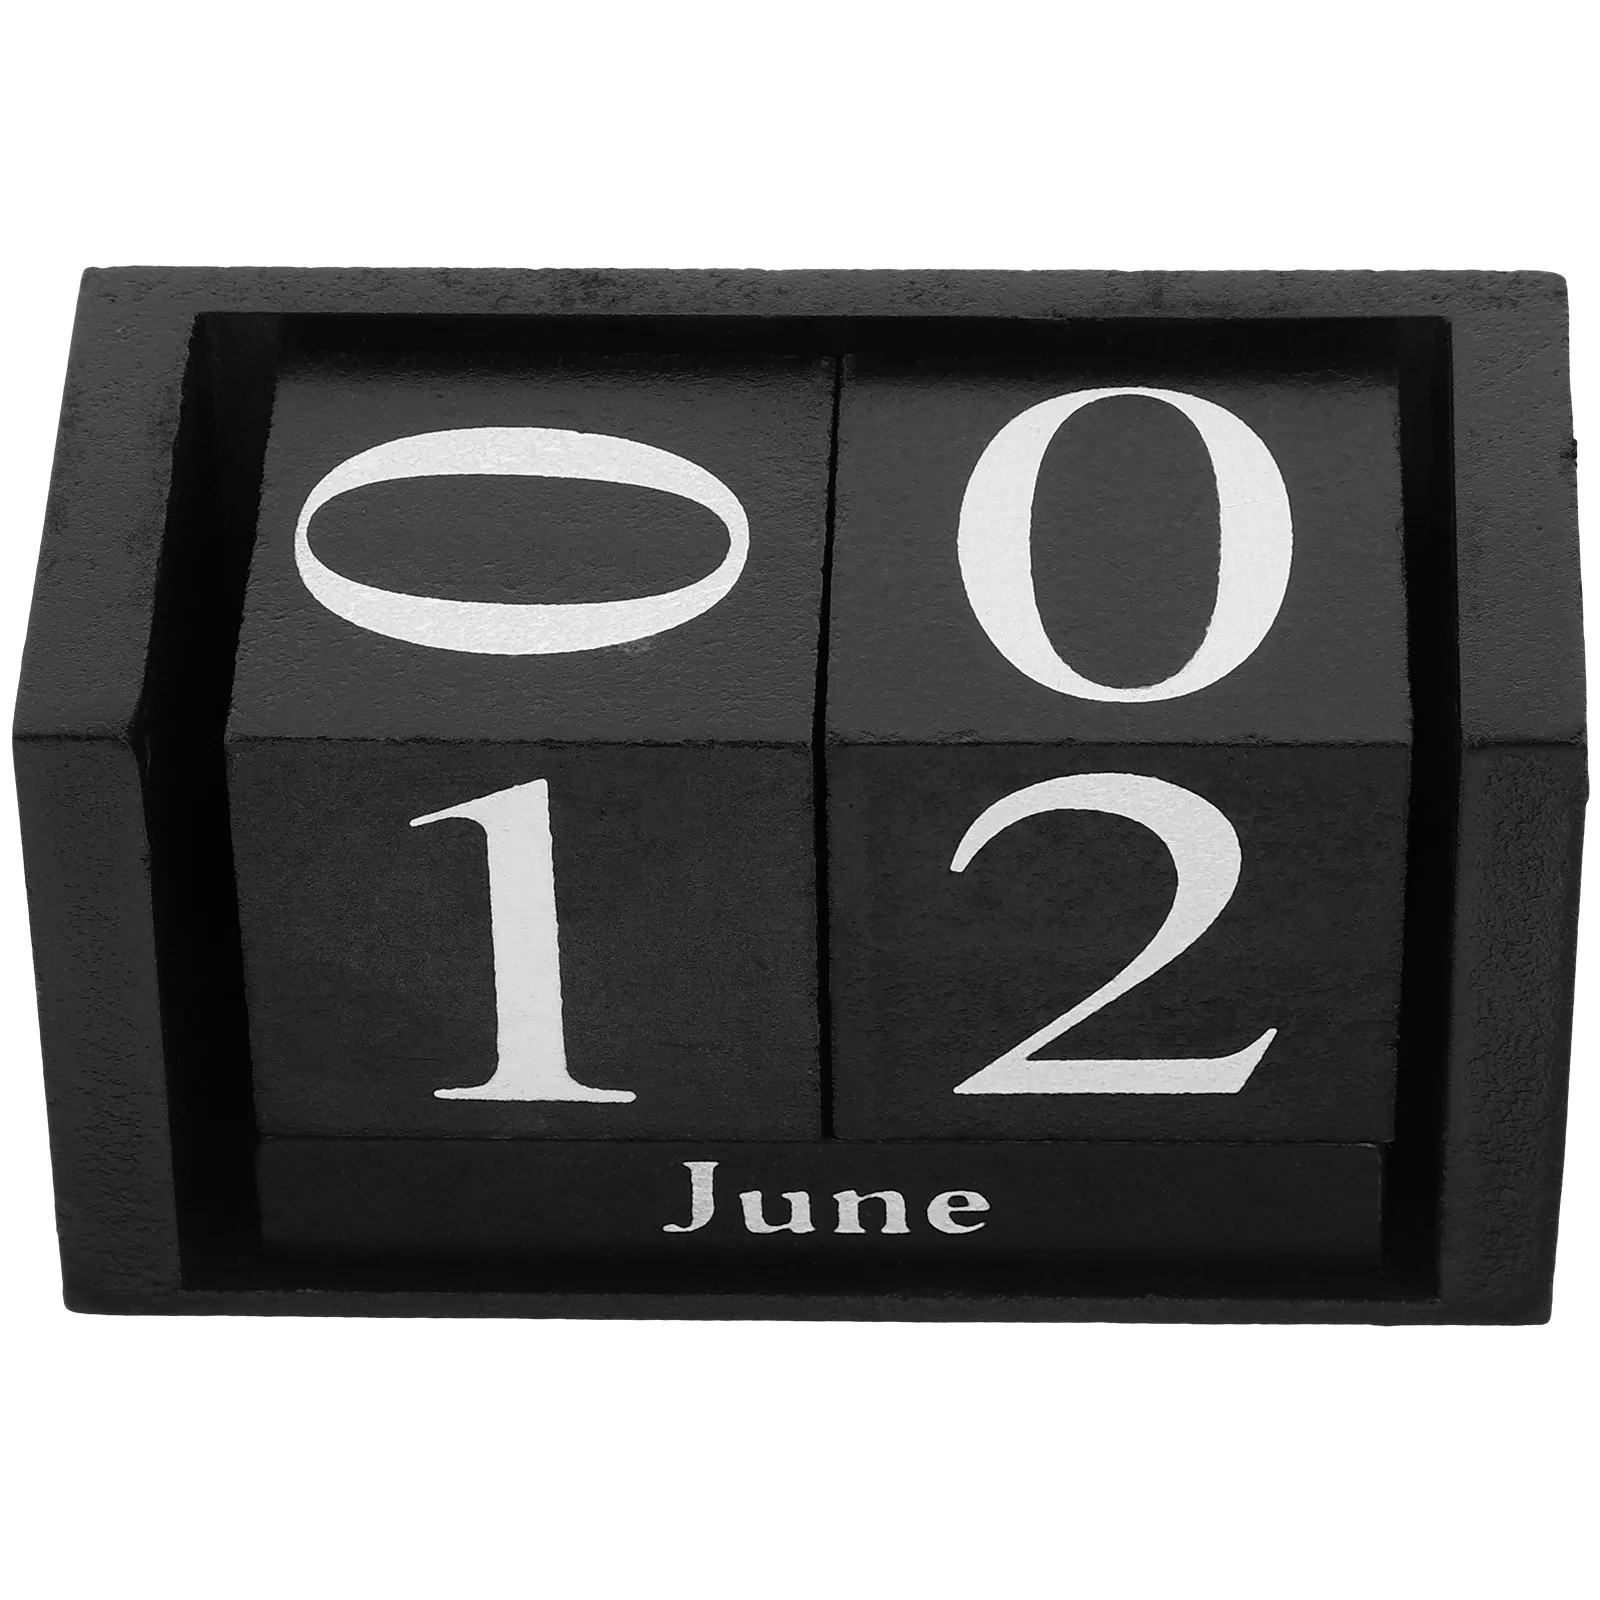 

Wooden Perpetual Calendar Eternal Blocks Month Date Display Desktop Accessories Photography Props Home Office Decor Ornaments